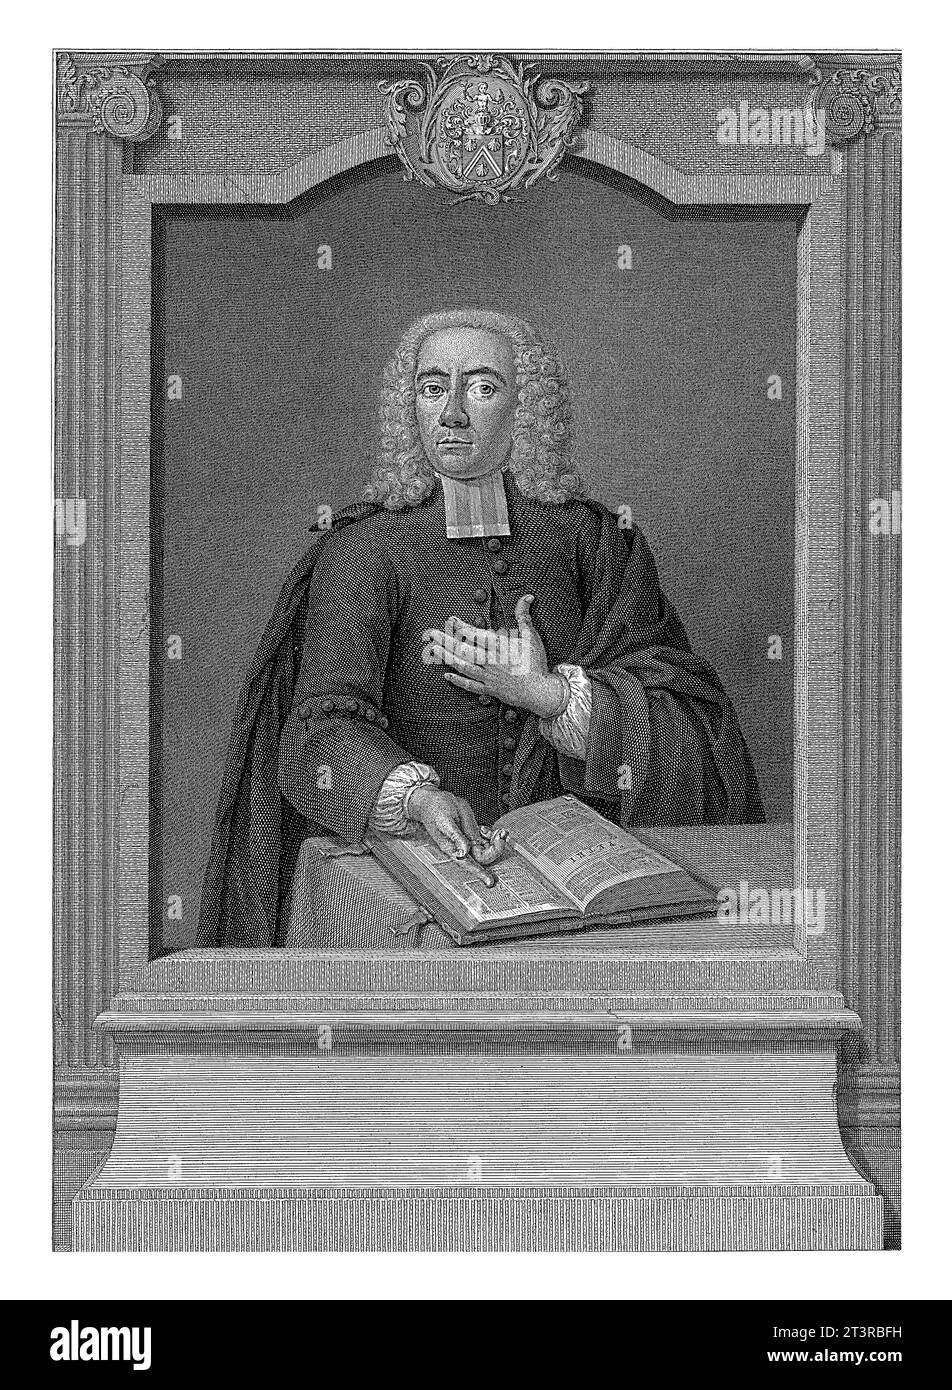 Ritratto di un predicatore sconosciuto, Jacob Houbraken, 1708 - 1780, inciso vintage. Foto Stock